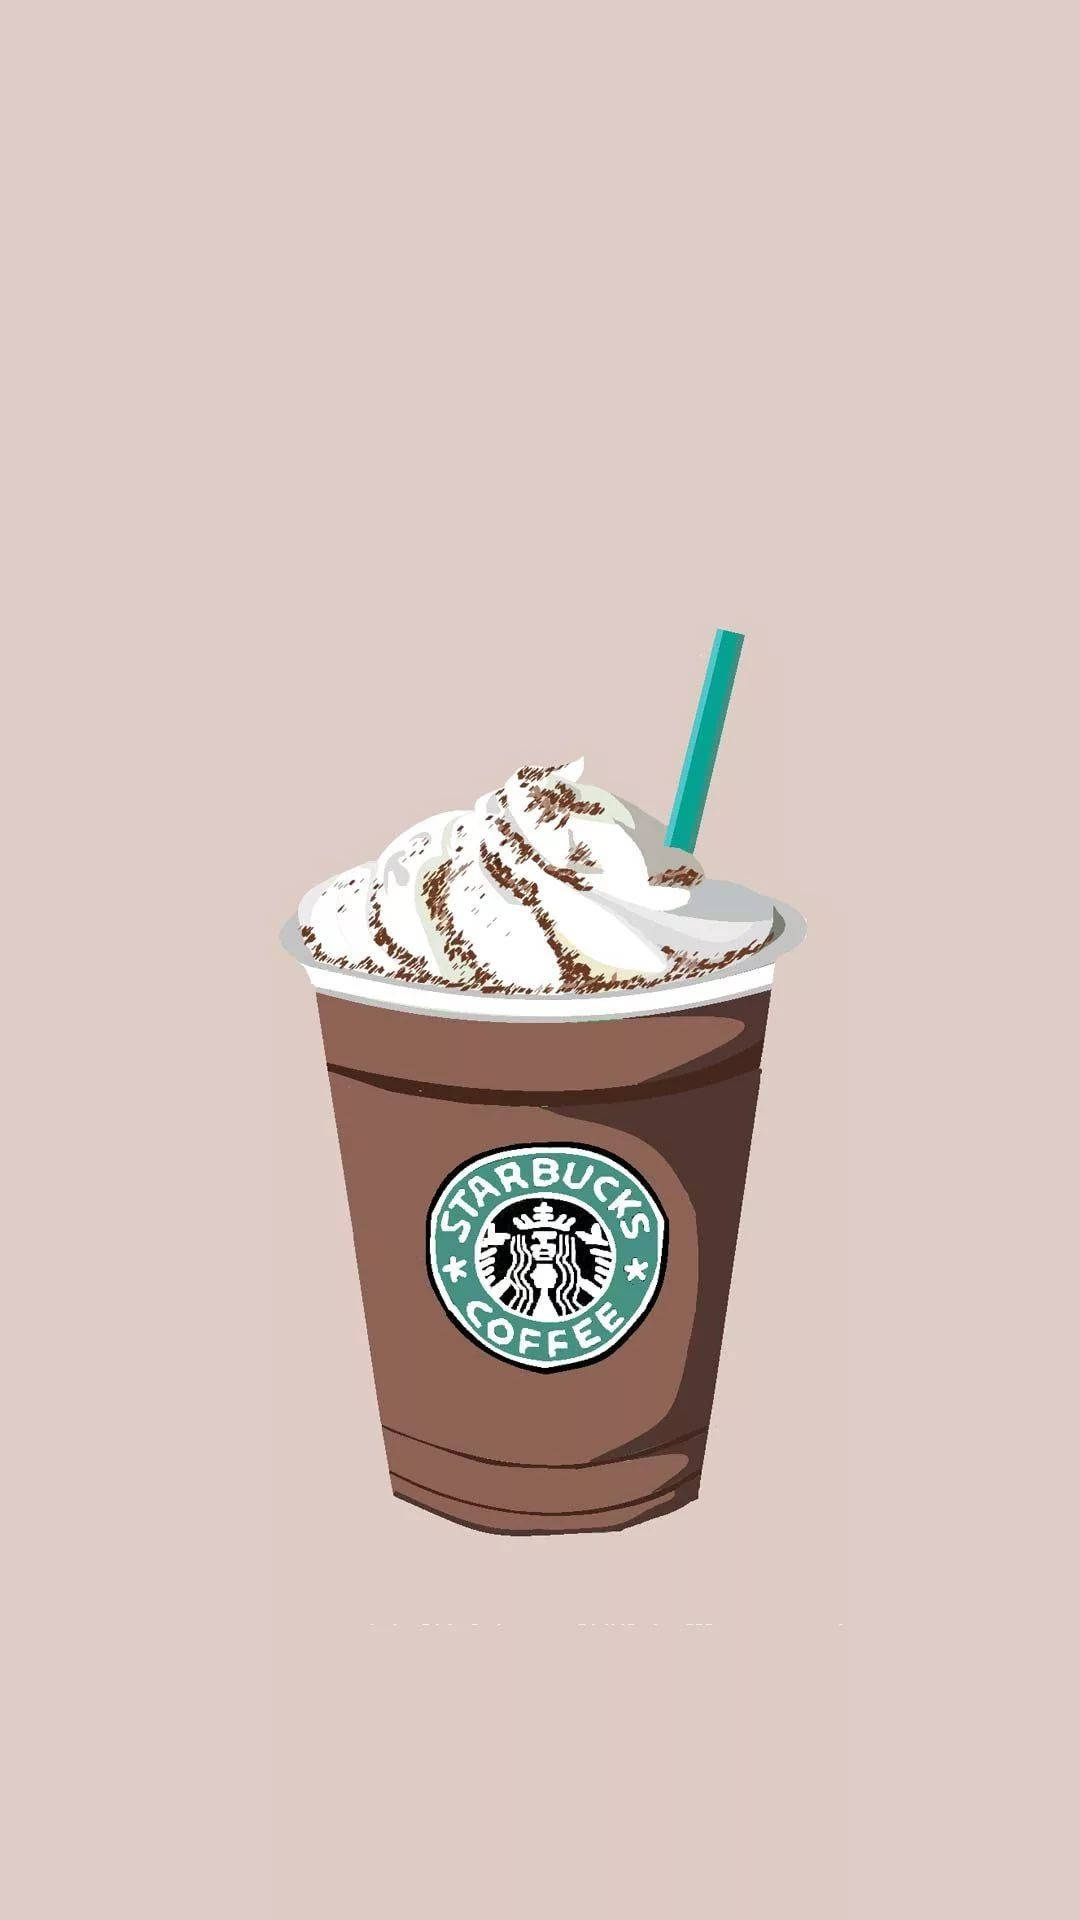 Top 999+ Starbucks Wallpaper Full HD, 4K✅Free to Use